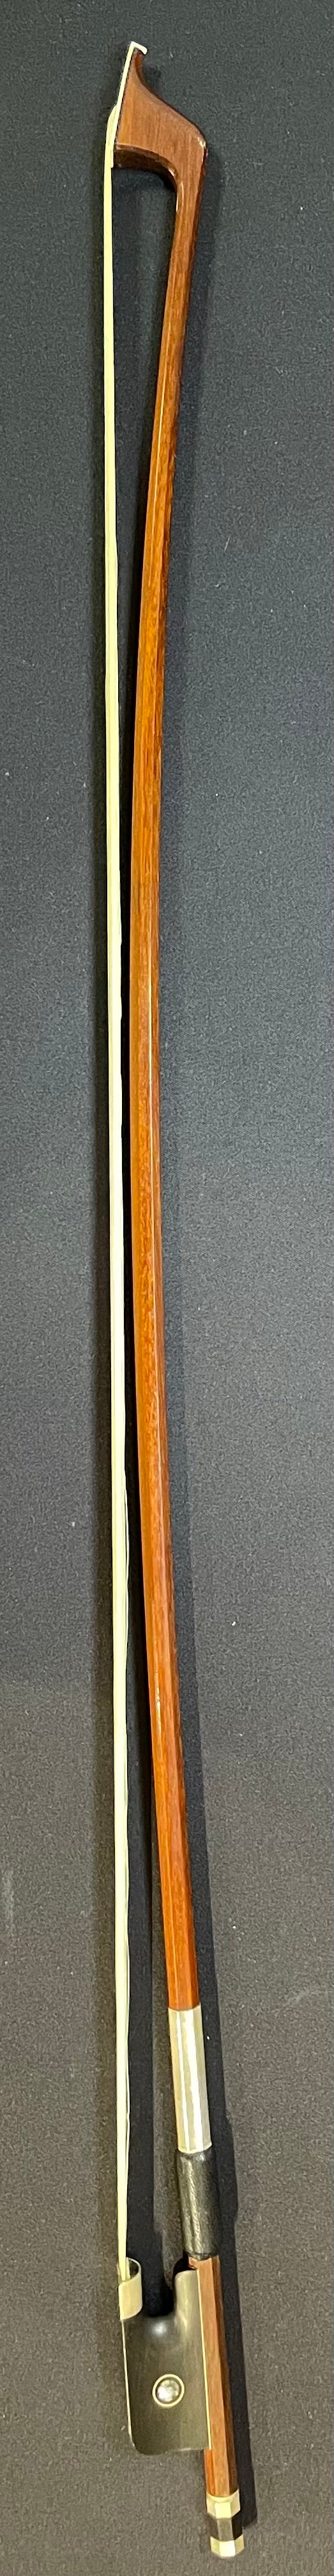 4/4 Cello Bow - W. Imberti Wood Model